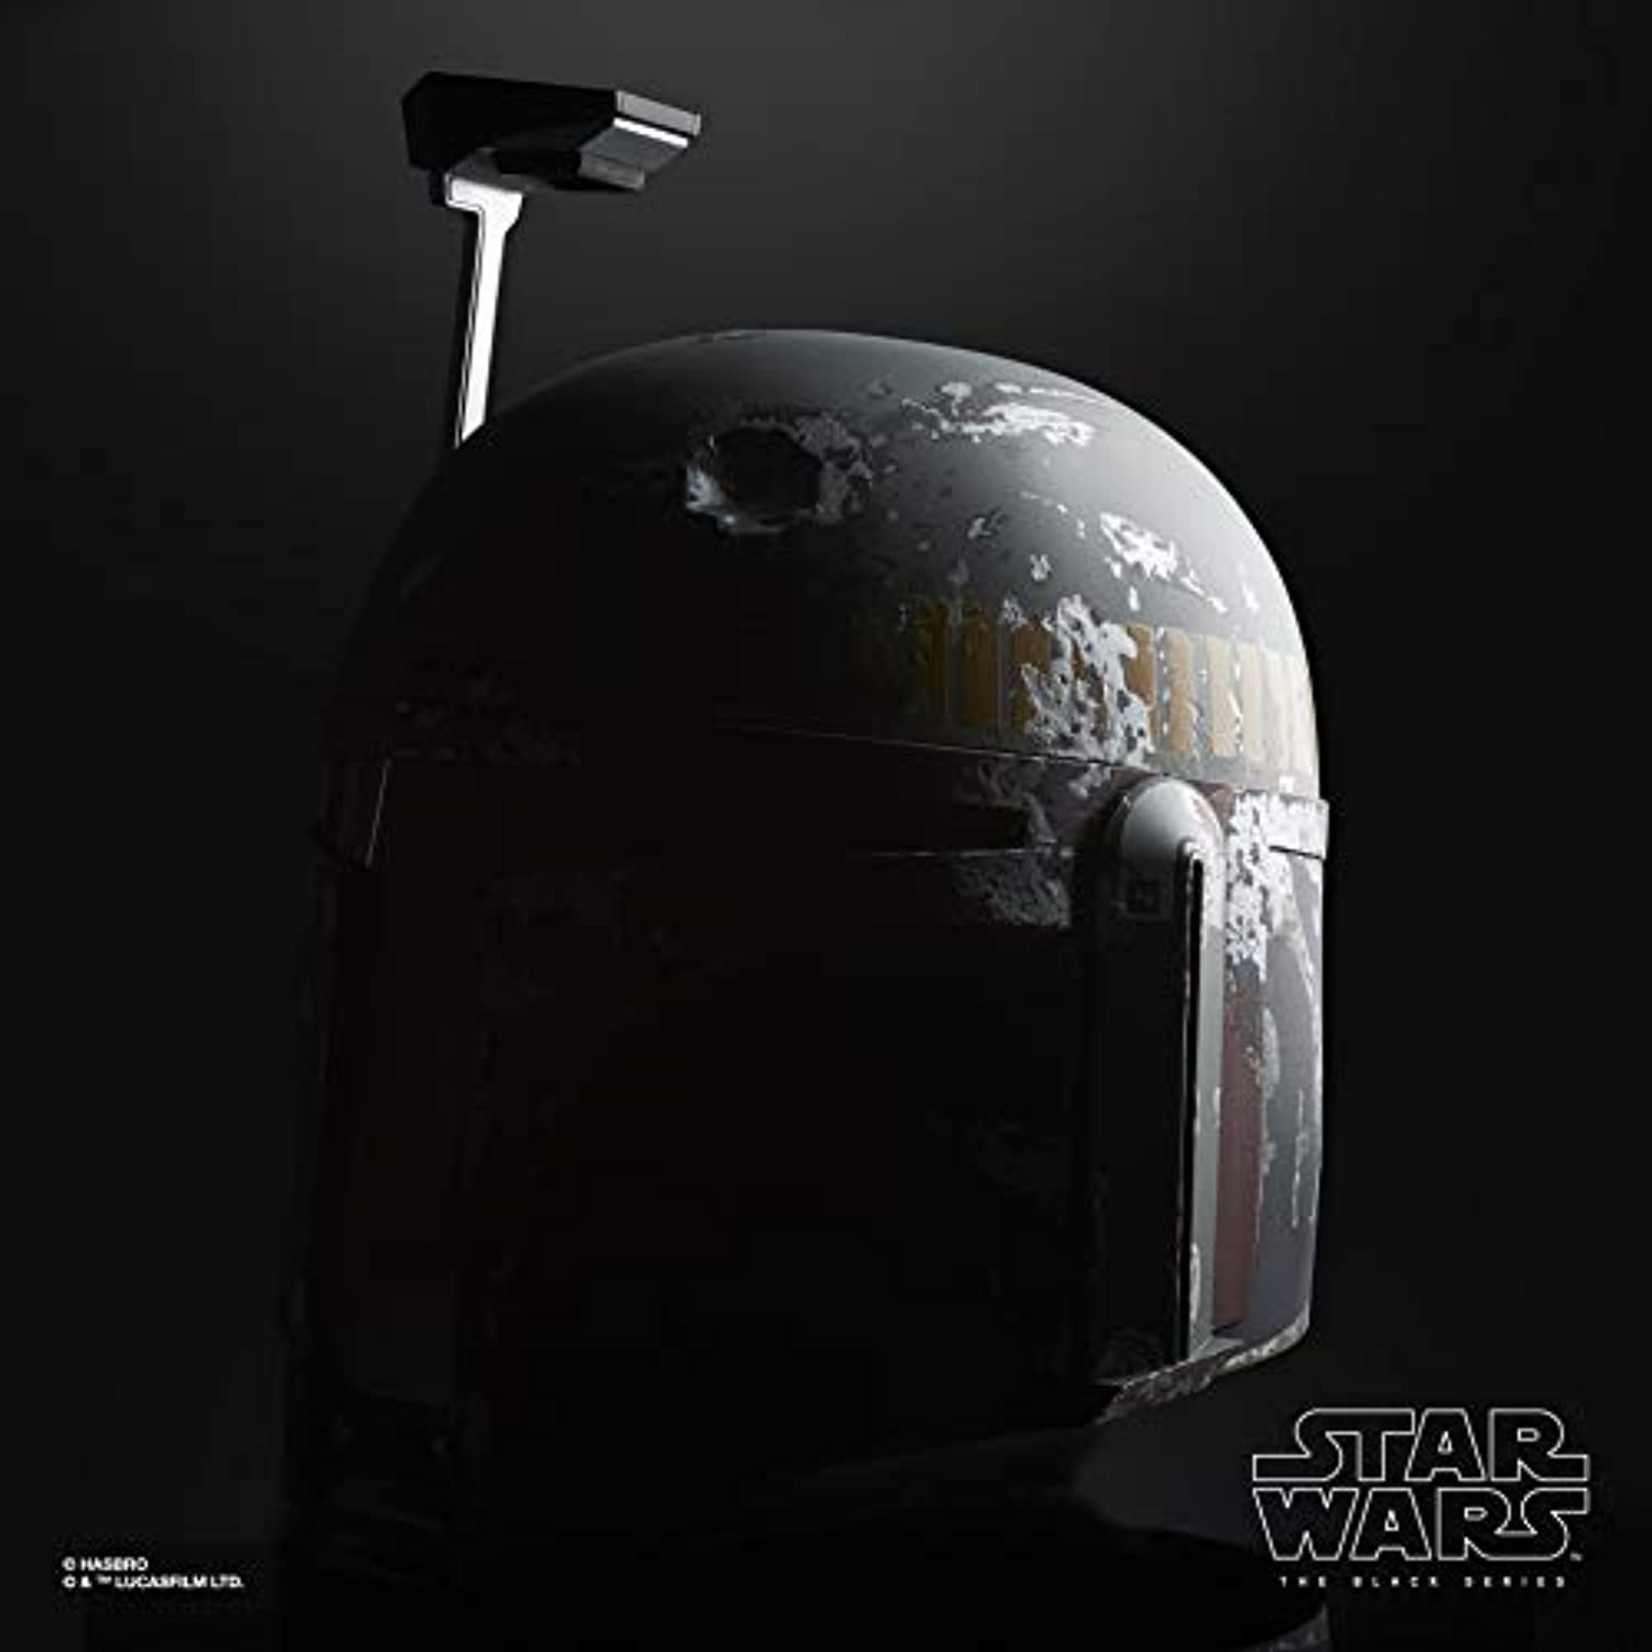 Star Wars The Black Series Star Wars: The Black Series Boba Fett Helmet Prop Replica